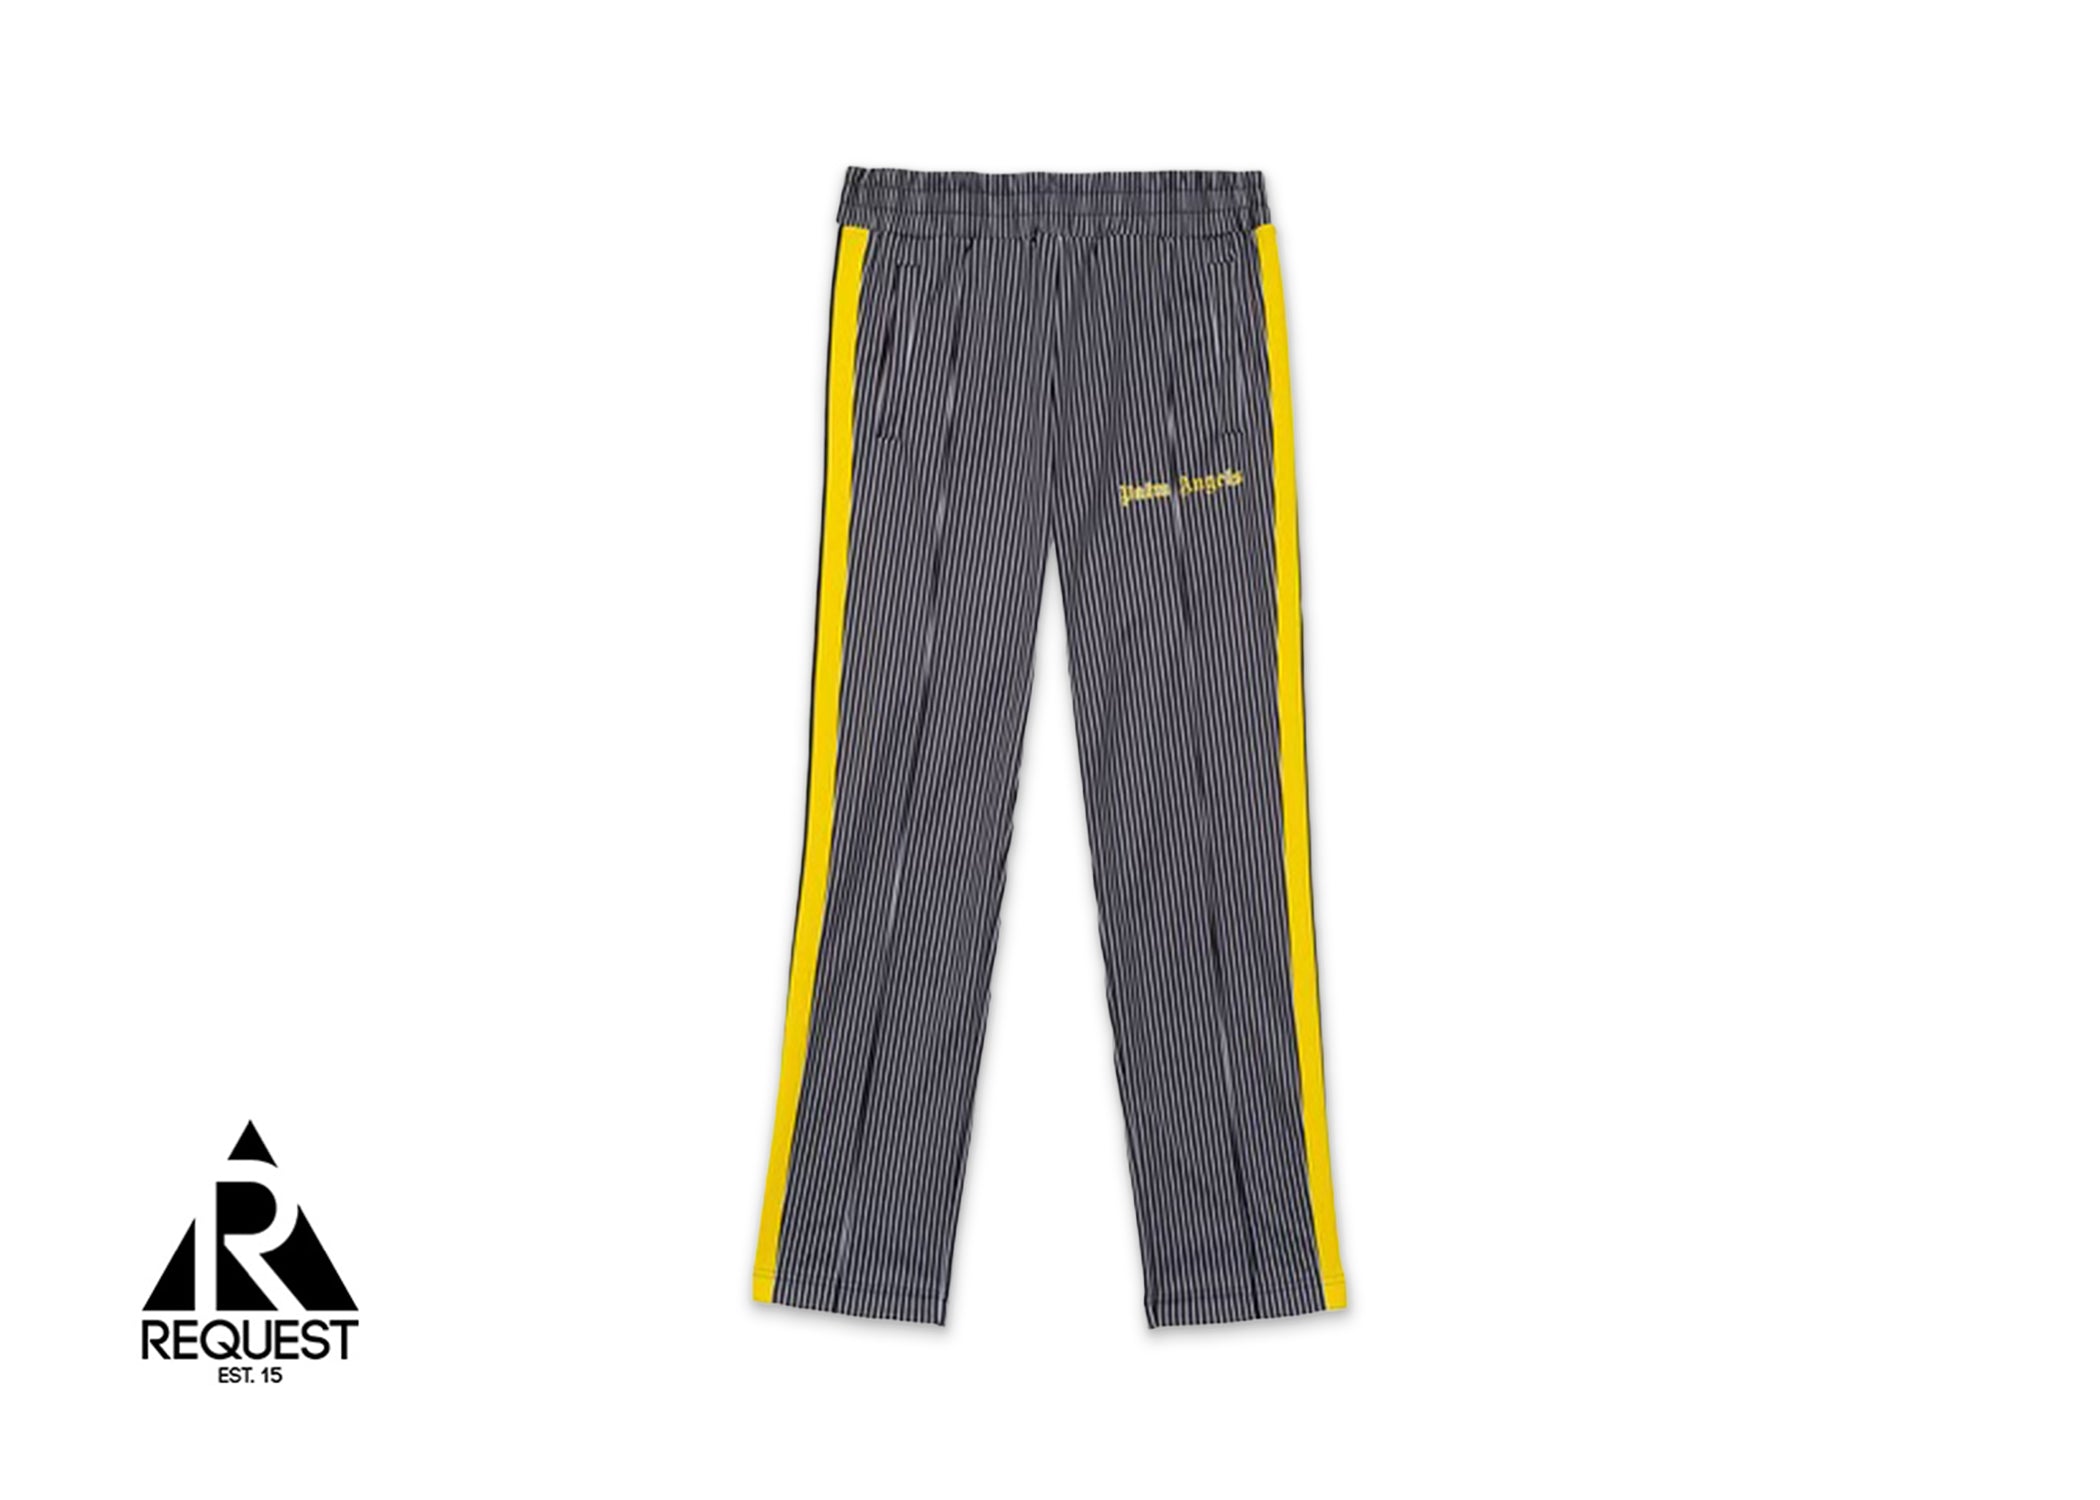 Palm Angels NBA Track Pants "Black/White/Yellow"